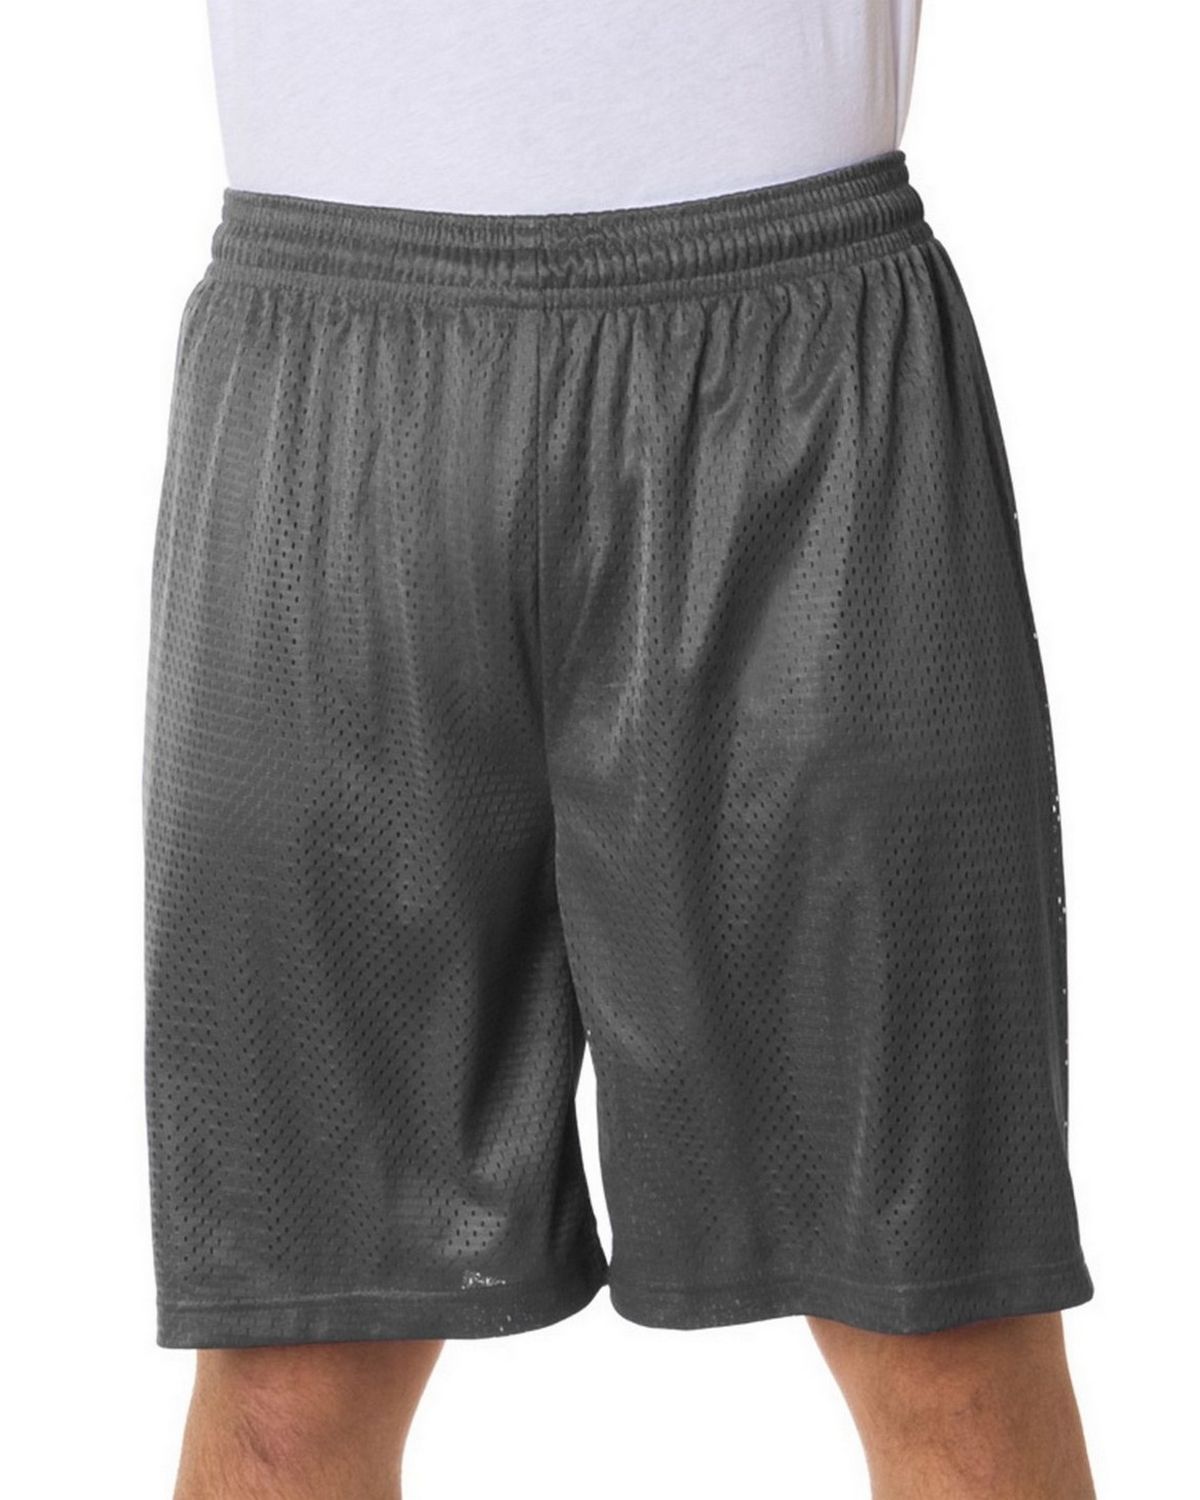 Badger 7209 Mesh Shorts - ApparelnBags.com